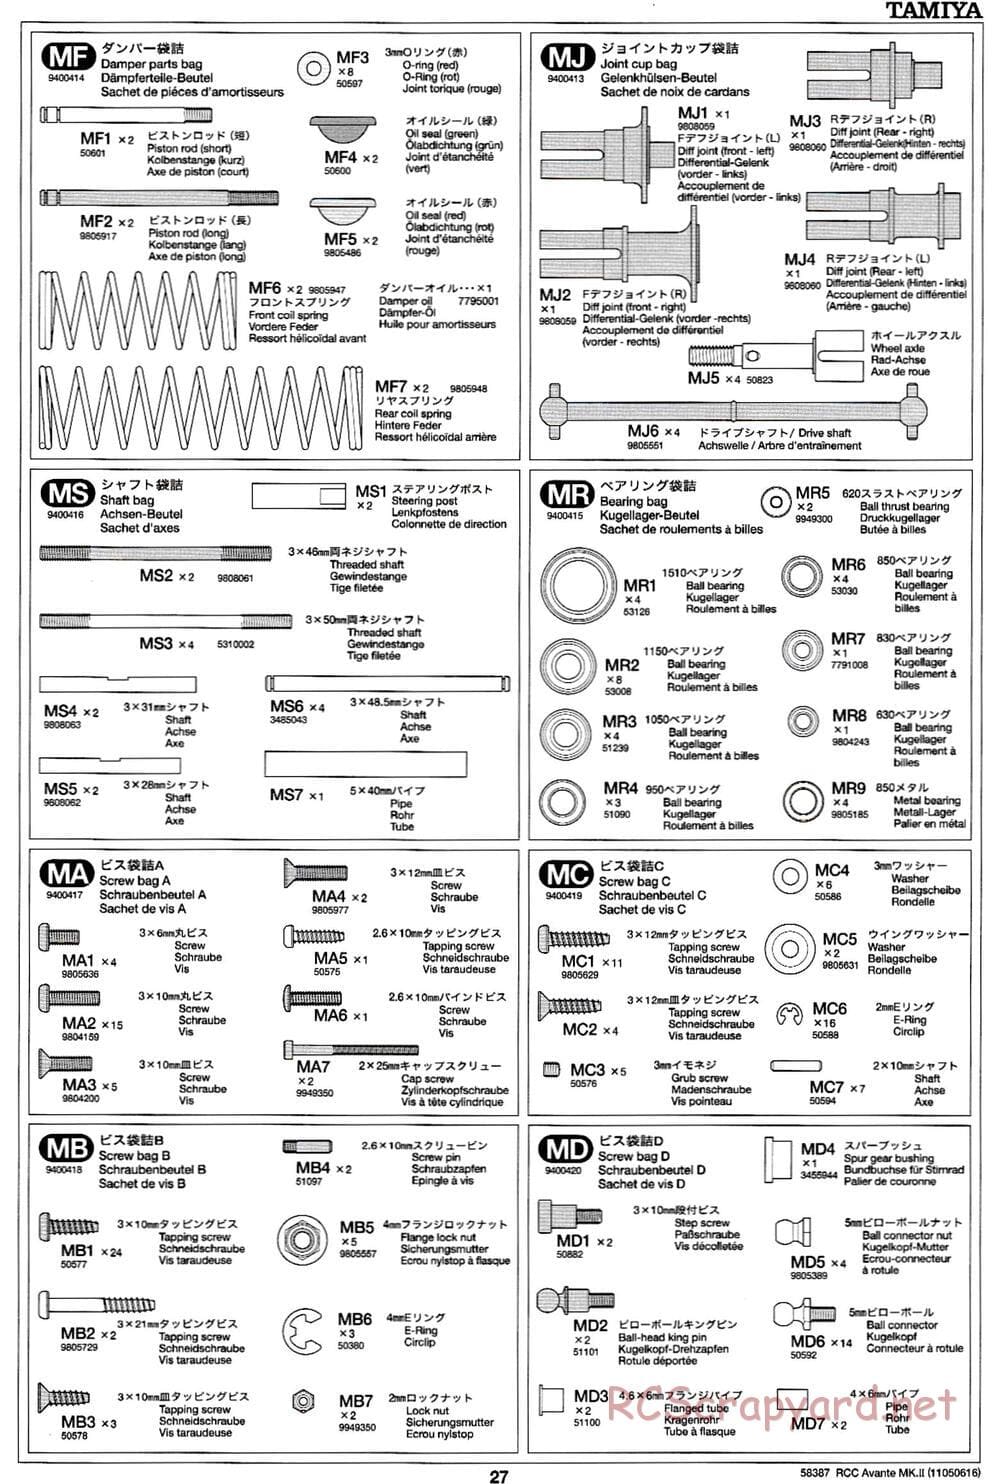 Tamiya - Avante Mk.II Chassis - Manual - Page 27